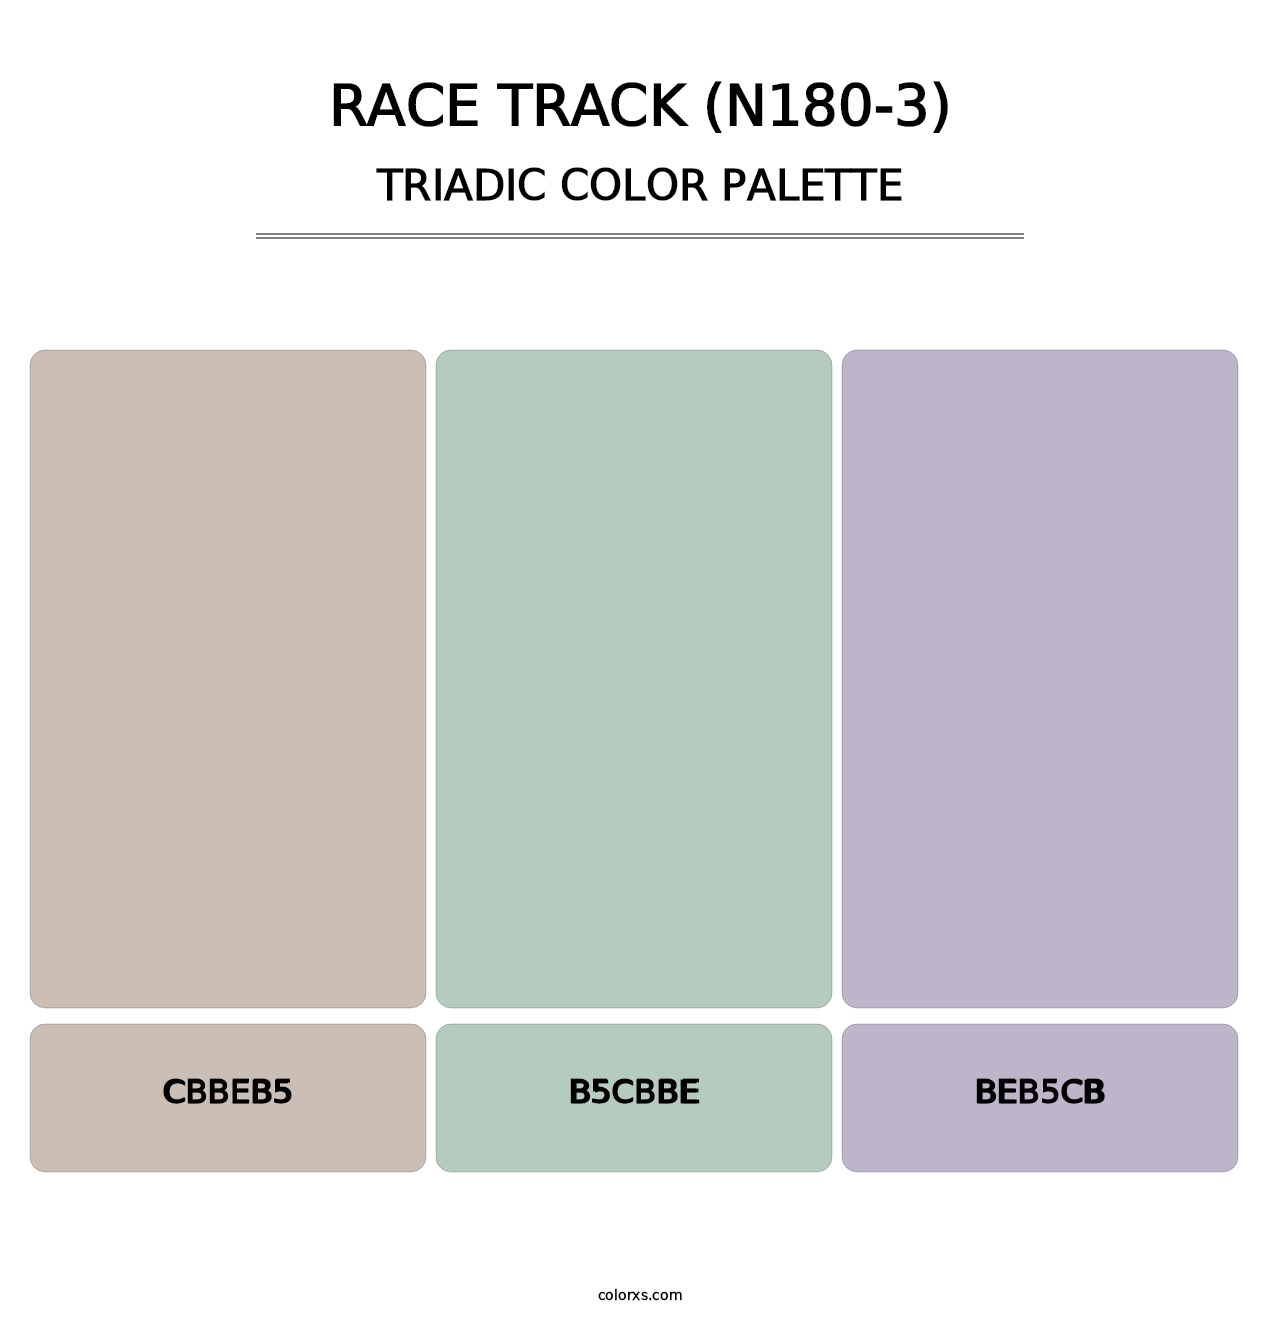 Race Track (N180-3) - Triadic Color Palette